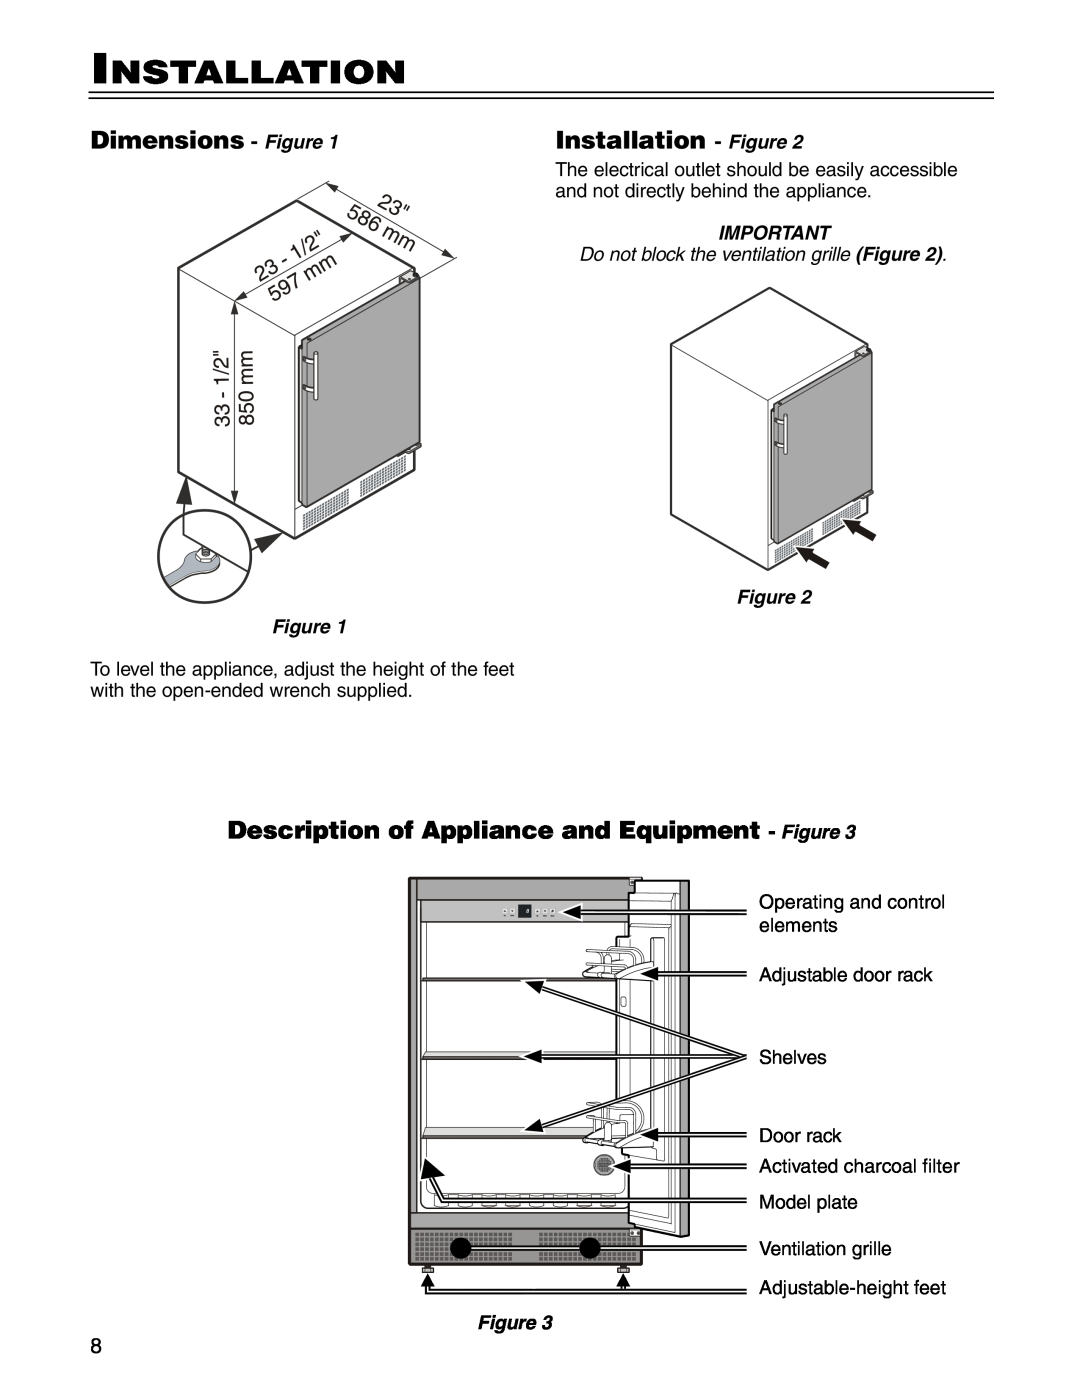 Liebherr RO 500 manual Description of Appliance and Equipment - Figure, Dimensions - Figure, Installation - Figure 